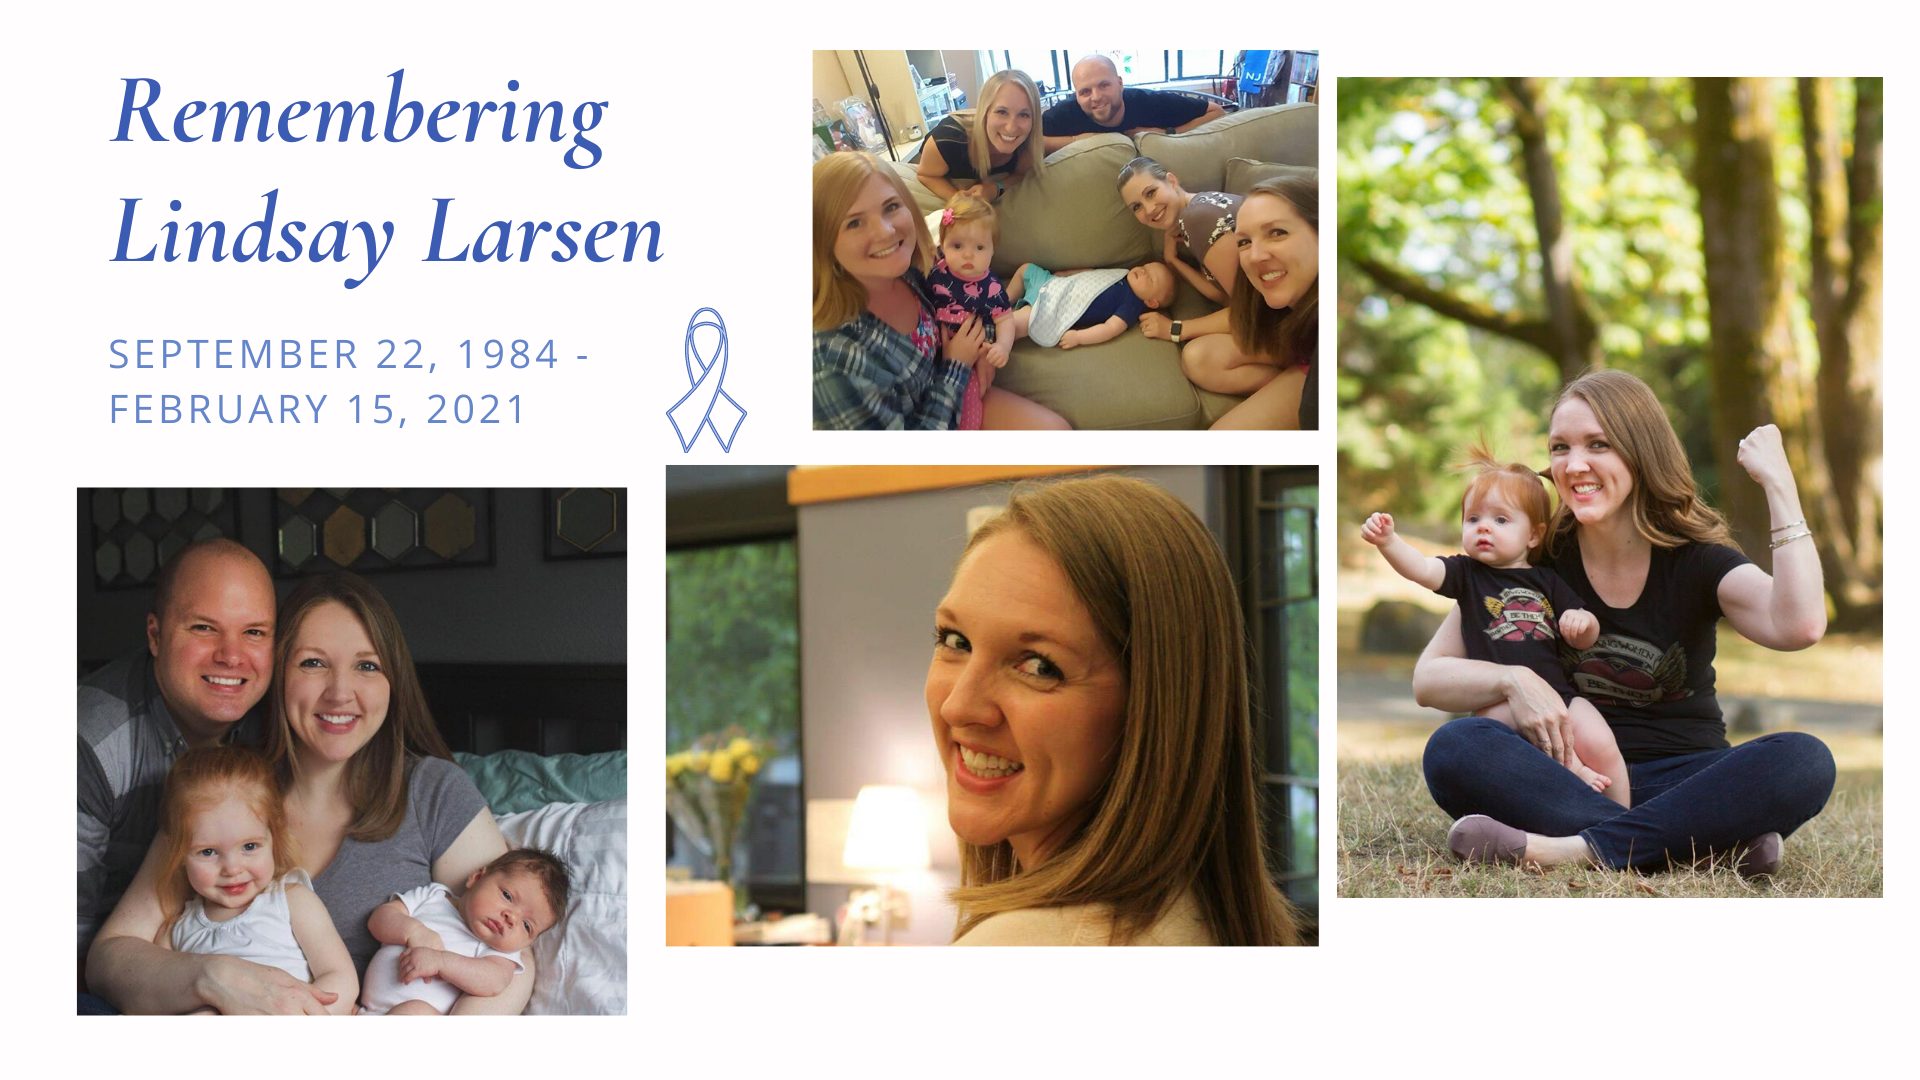 Remembering Lindsay Larsen